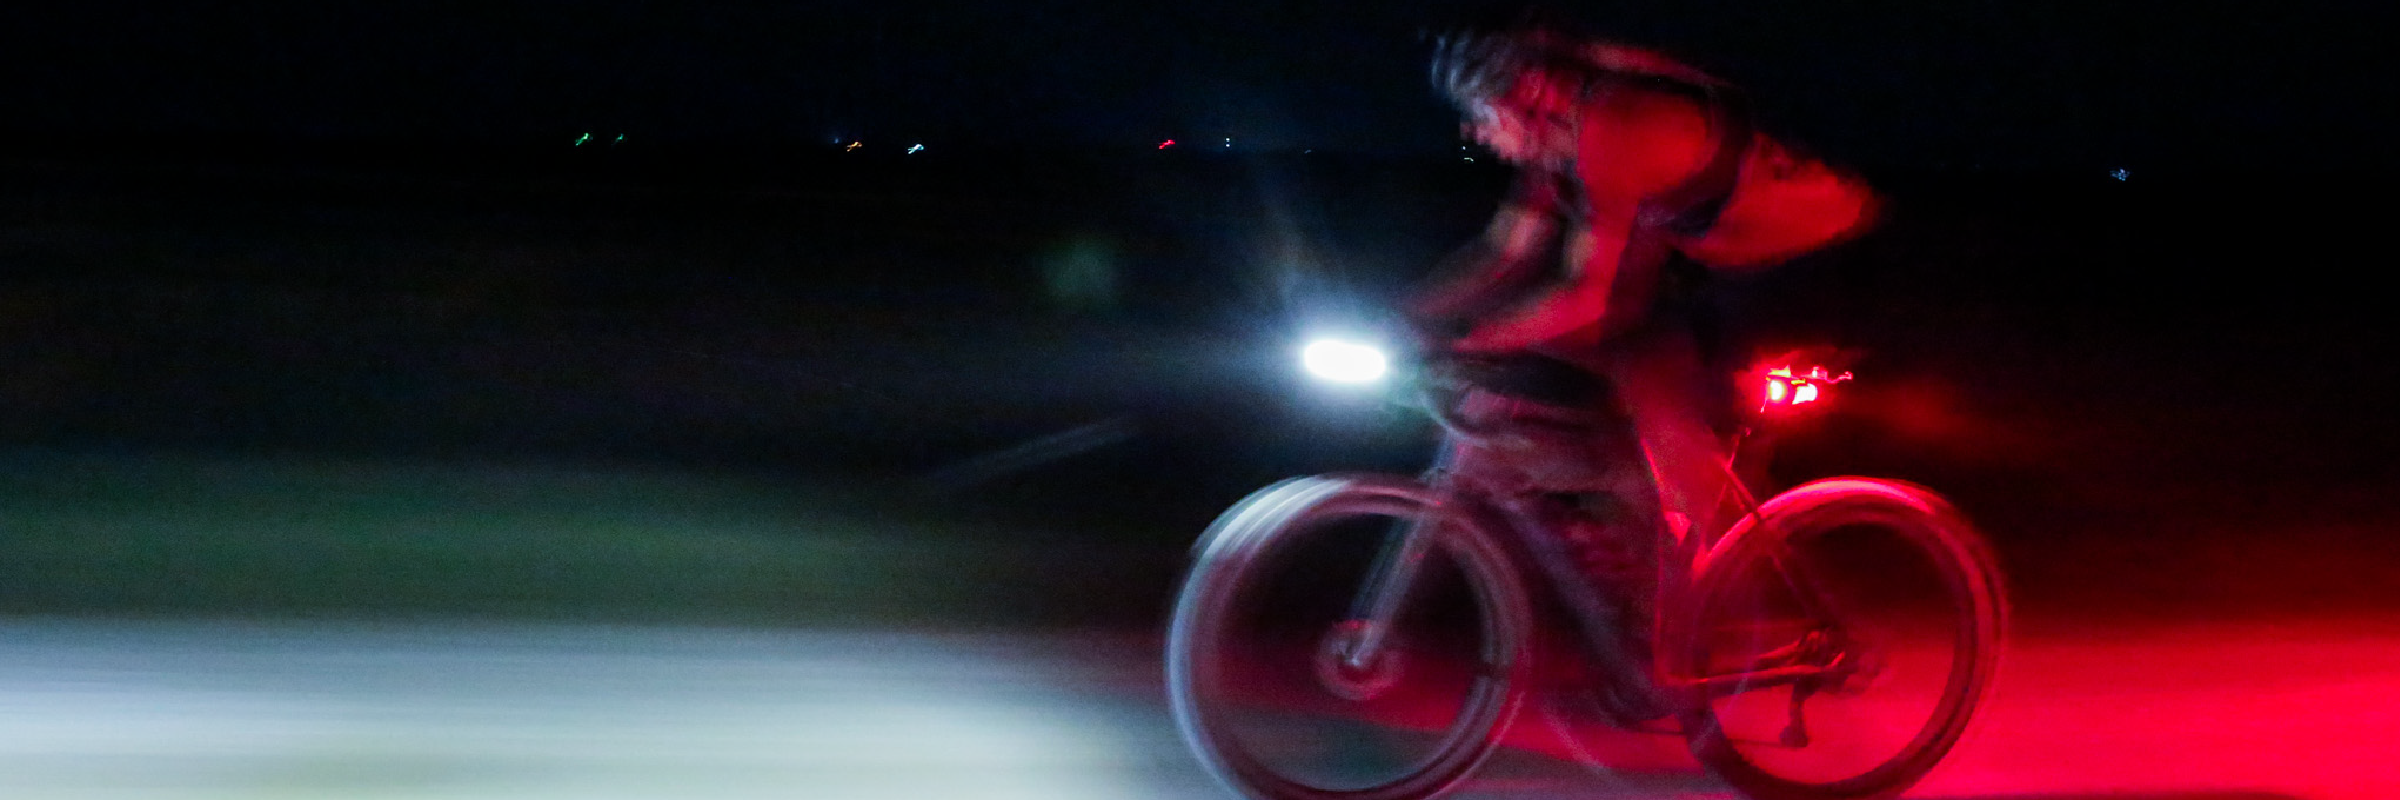 Riding at night: Gravel Worlds